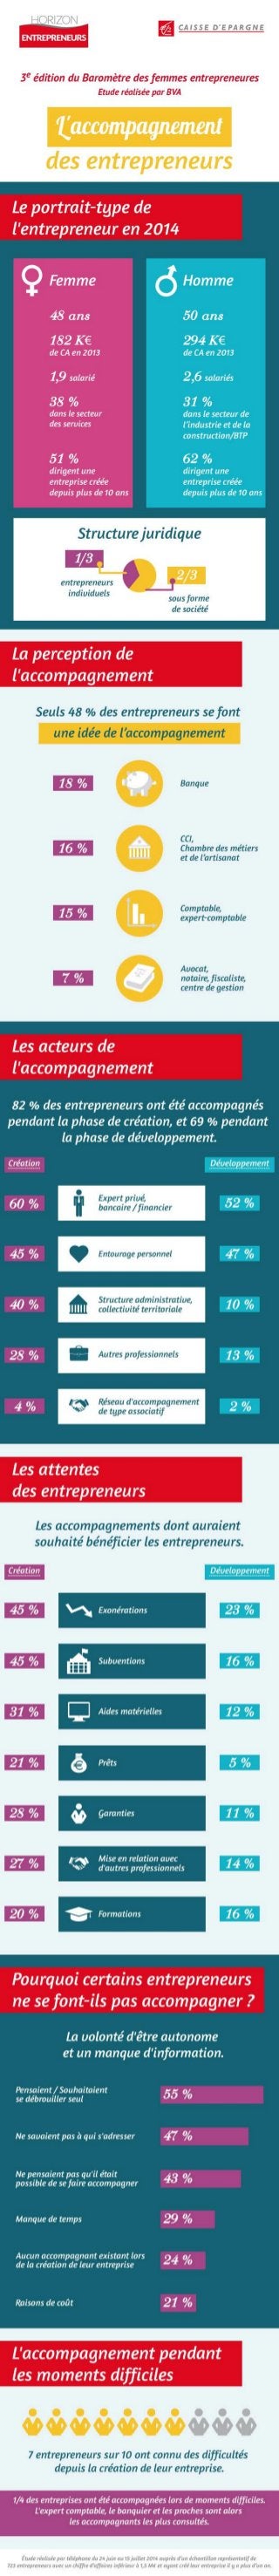 Infographie barometre-femmes-entrepreneures-2014